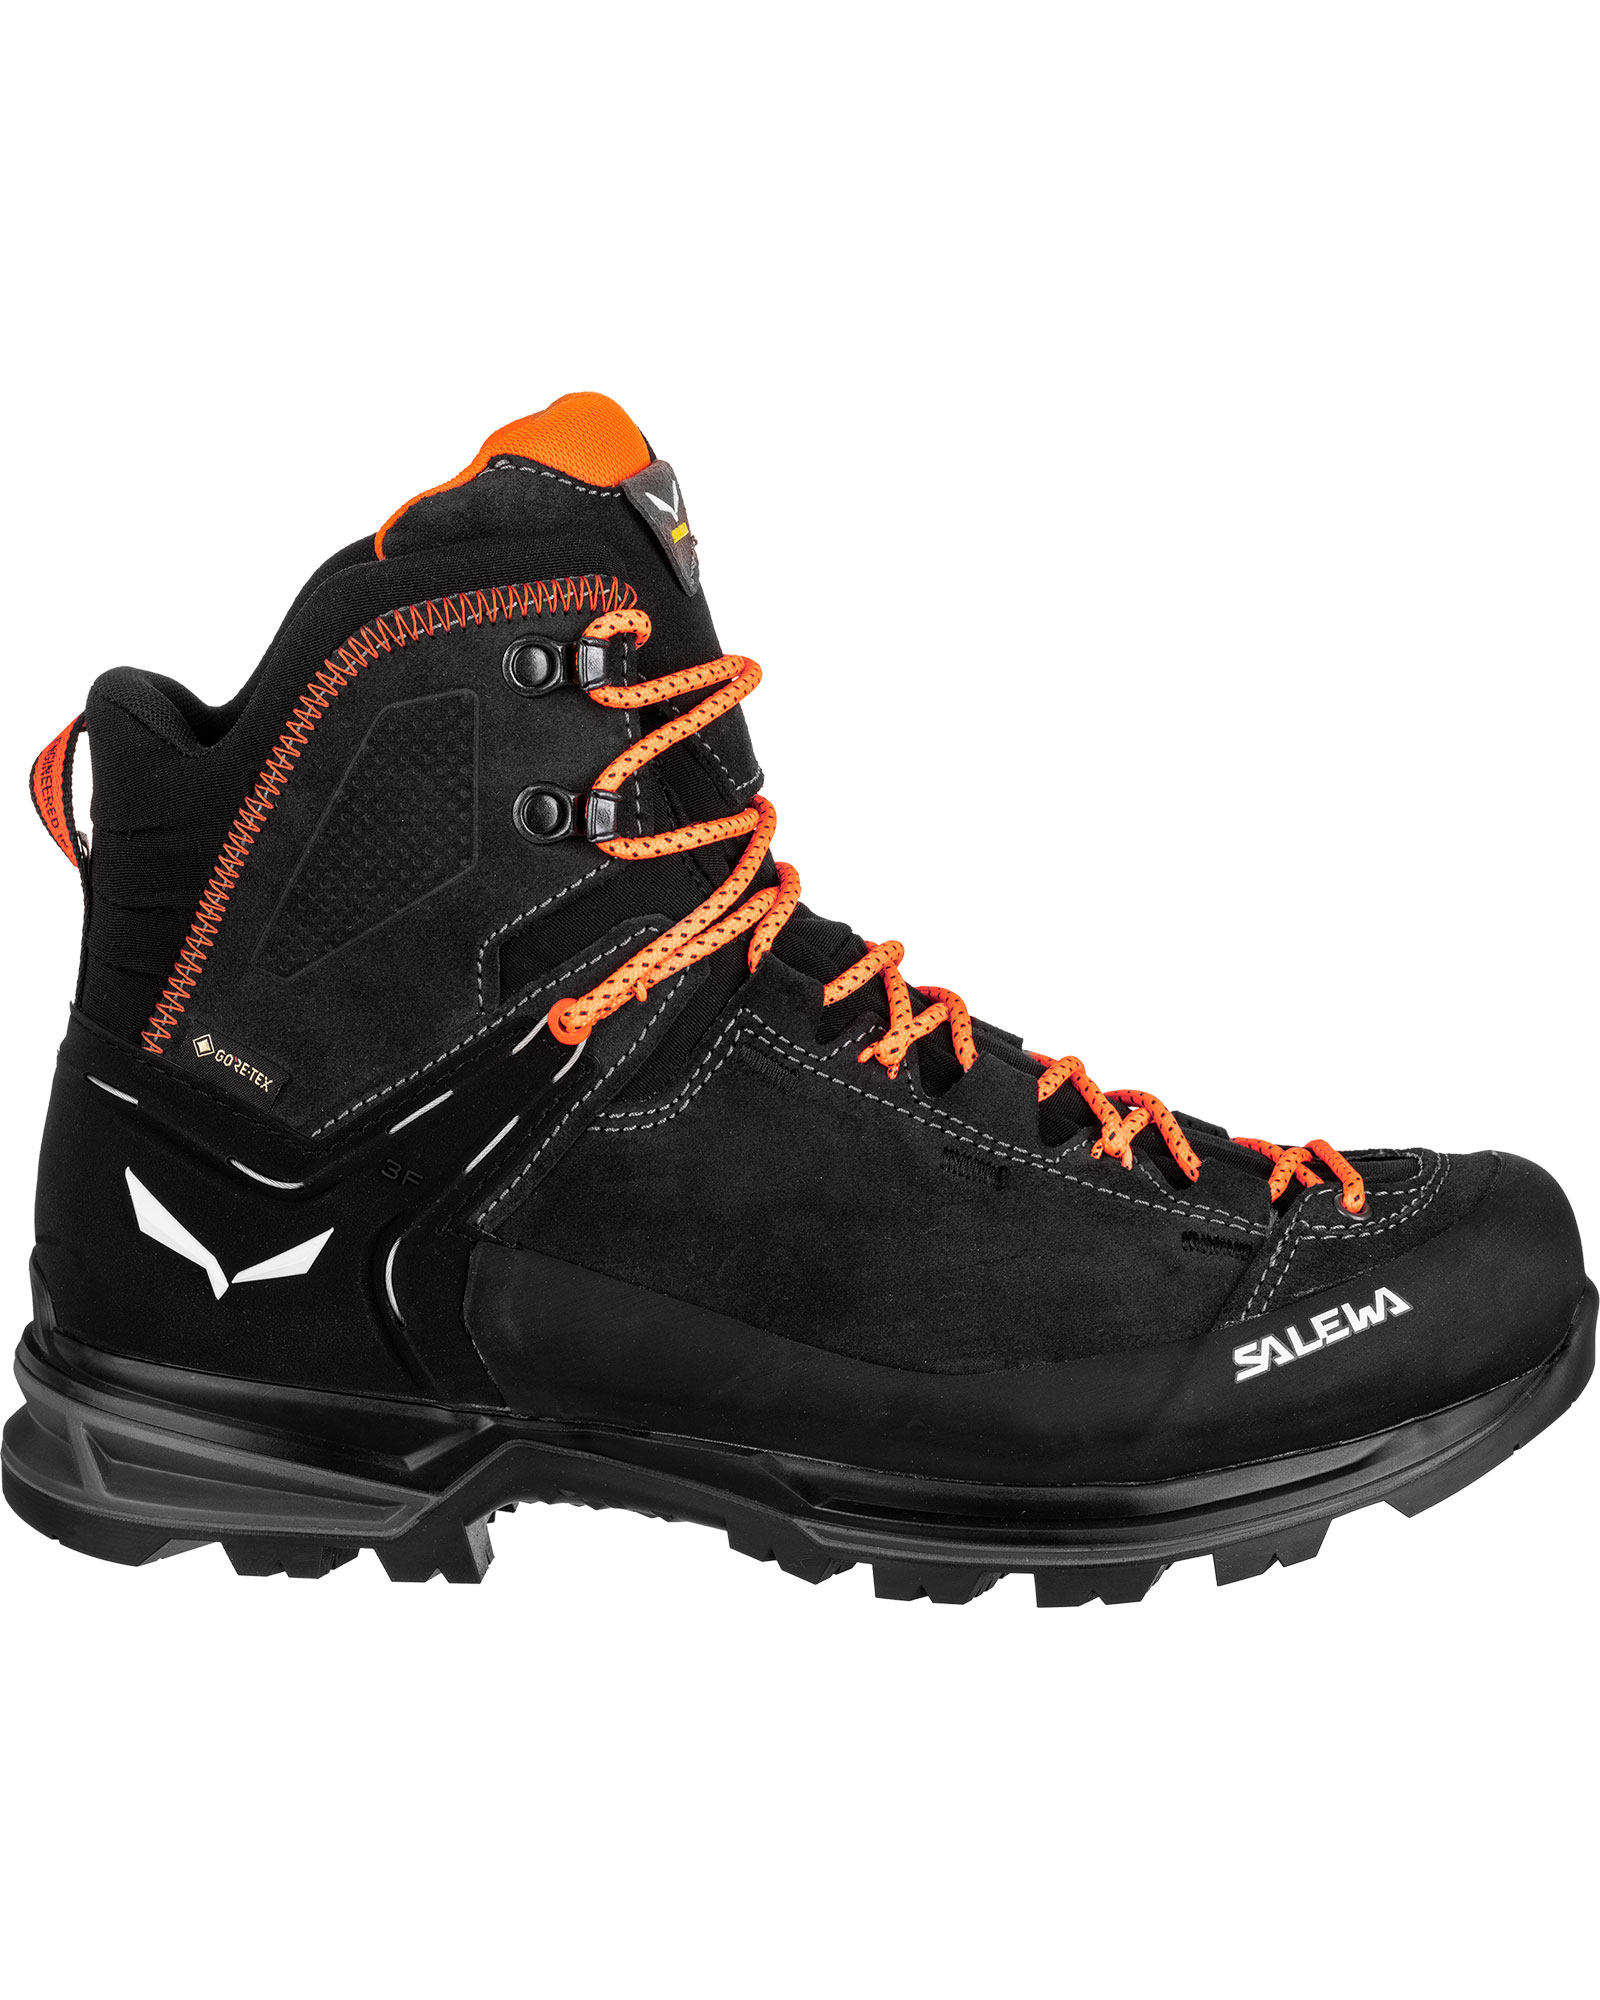 Salewa Mountain Trainer 2 Mid GORE TEX Men’s Boots - Onyx UK 12